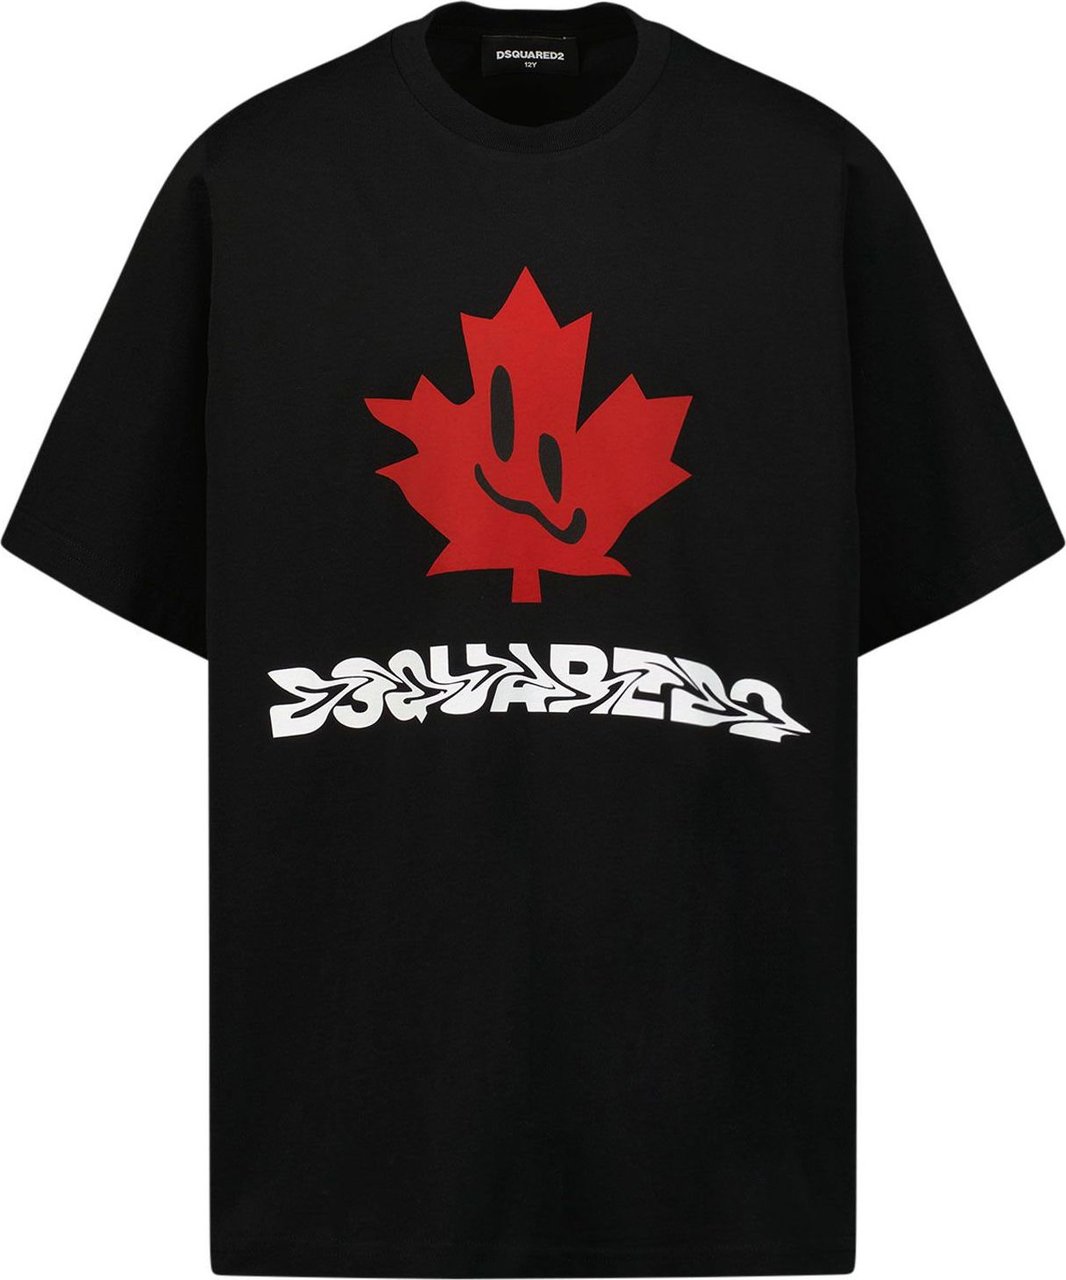 Dsquared2 Dsquared2 DQ1228 kinder t-shirt zwart Zwart